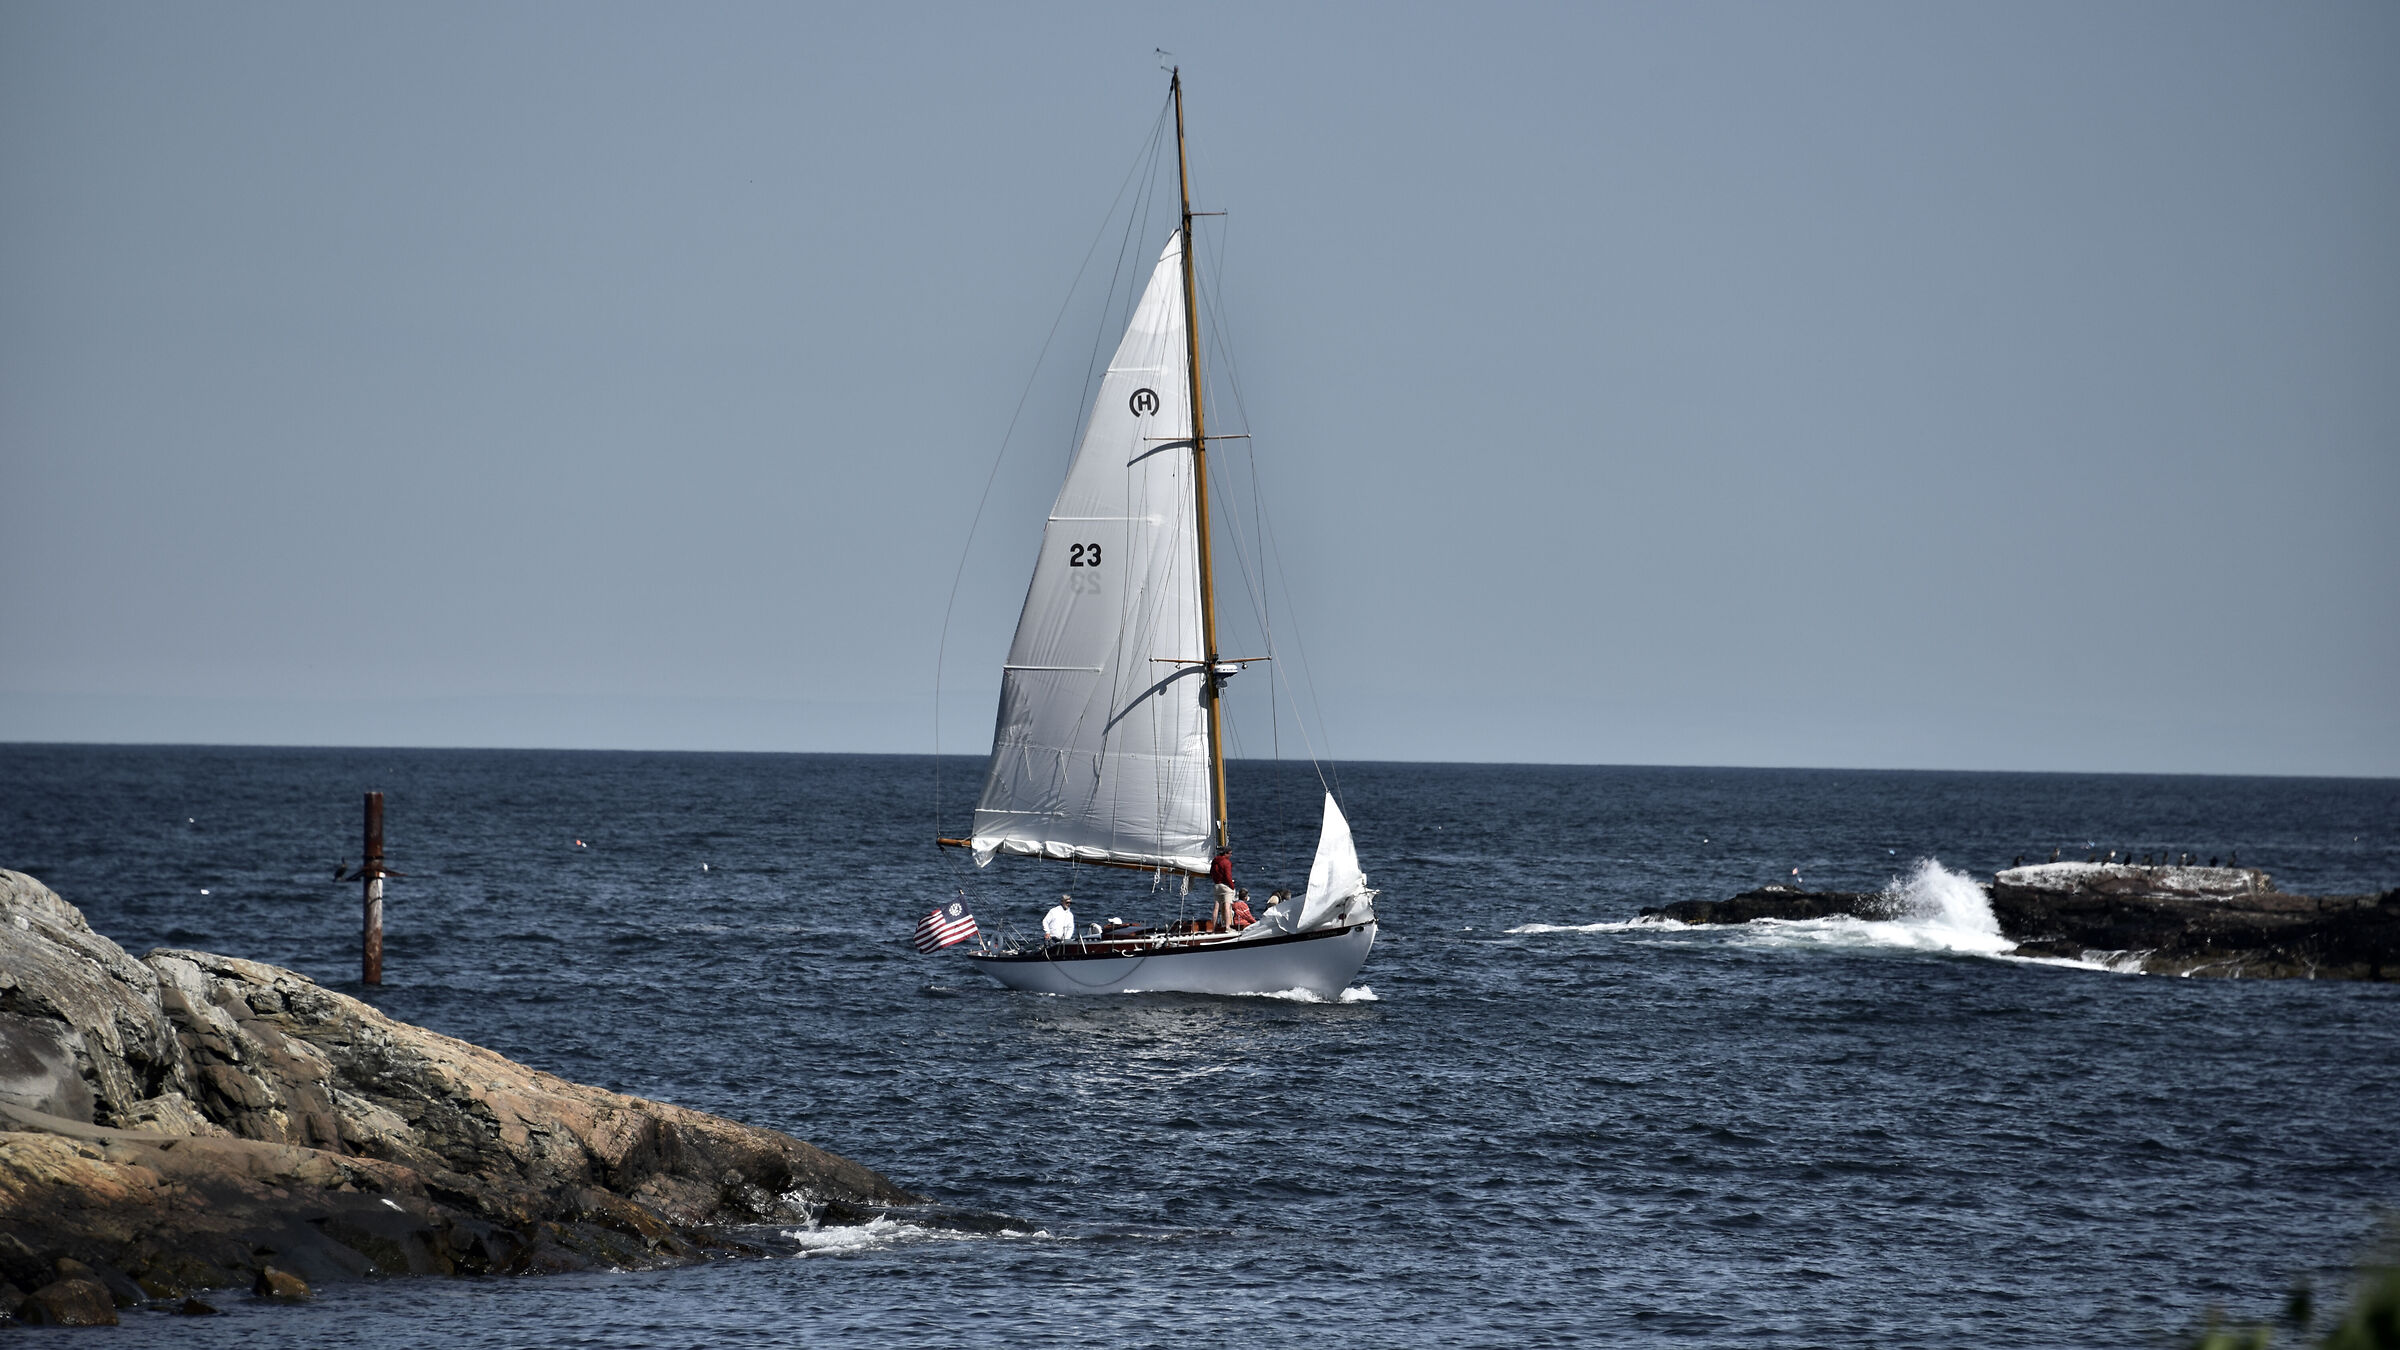 Sailing is a great sport - Maine U.S.A. June 2022...